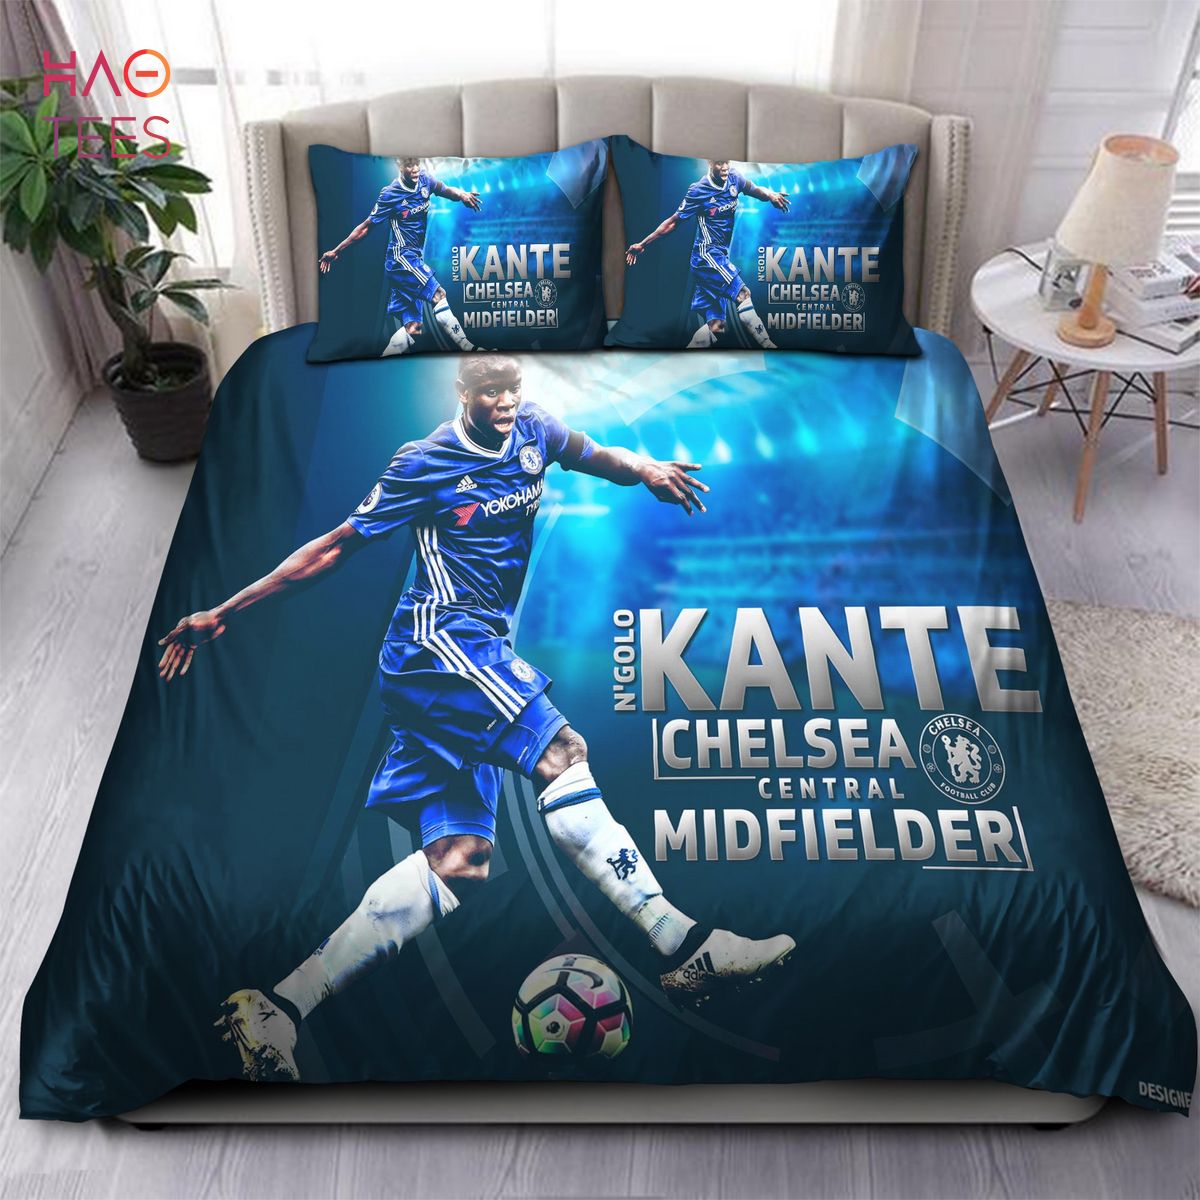 Kante Chelsea F.C. Bedding Sets